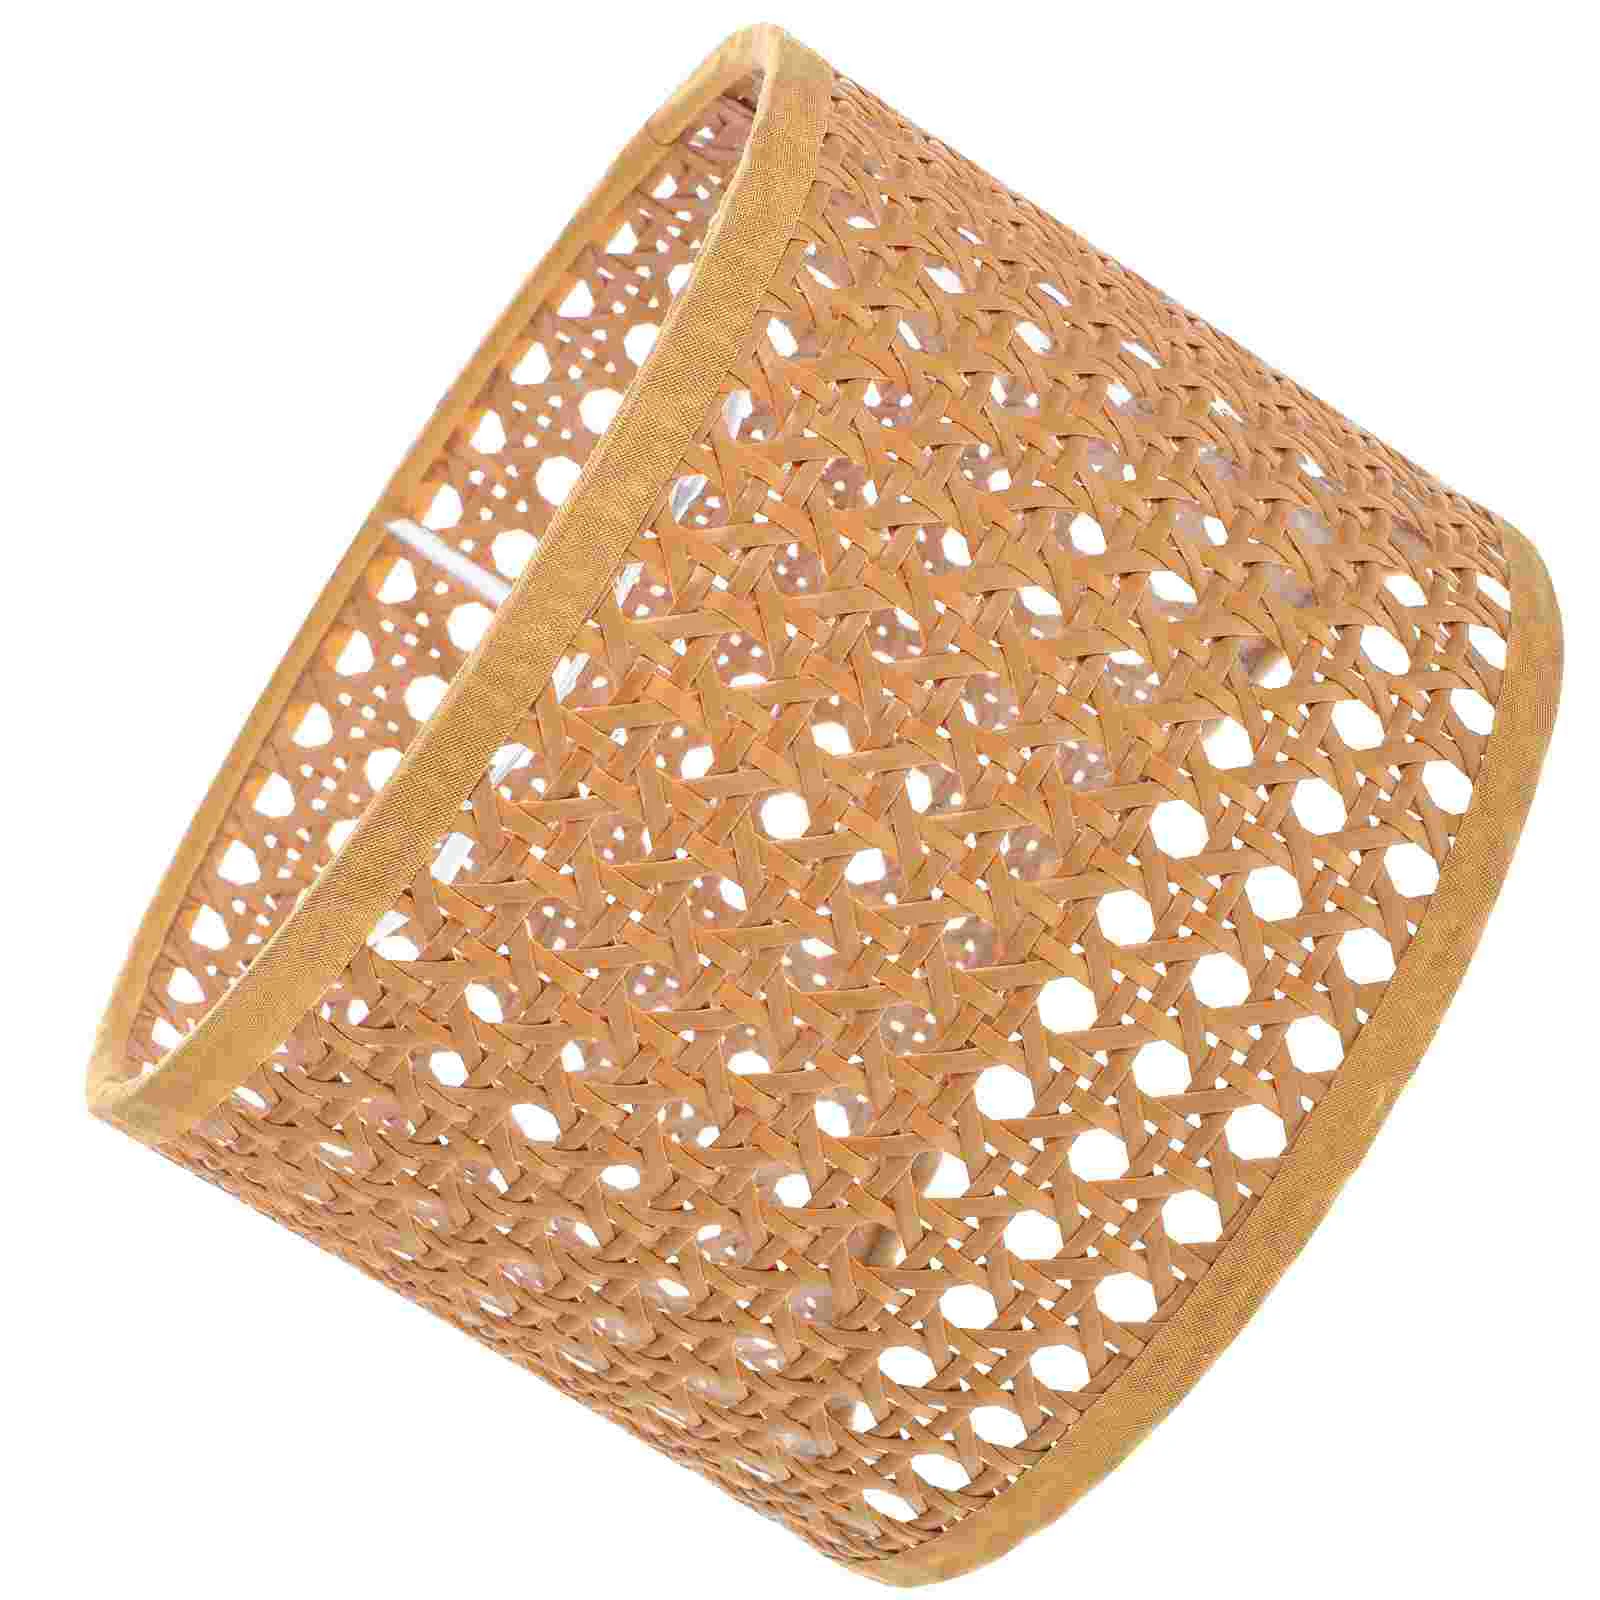 

Woven Rattan Lampshade Pendant Weaving Cover Adornment Accessory Hand Dustproof Decor